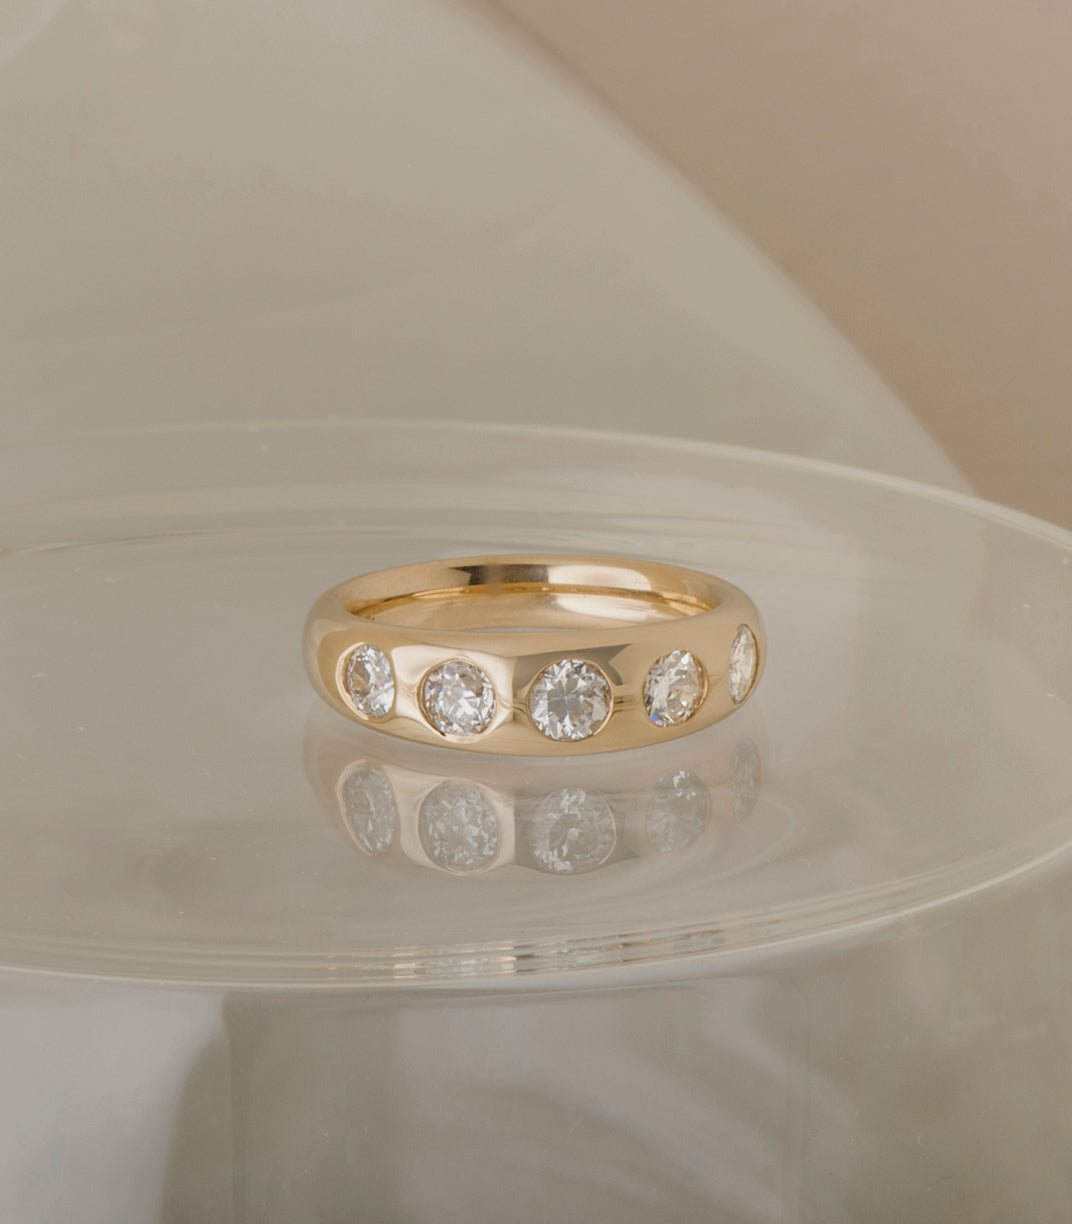 Rosa Ring - Antique Old European Cut Diamond